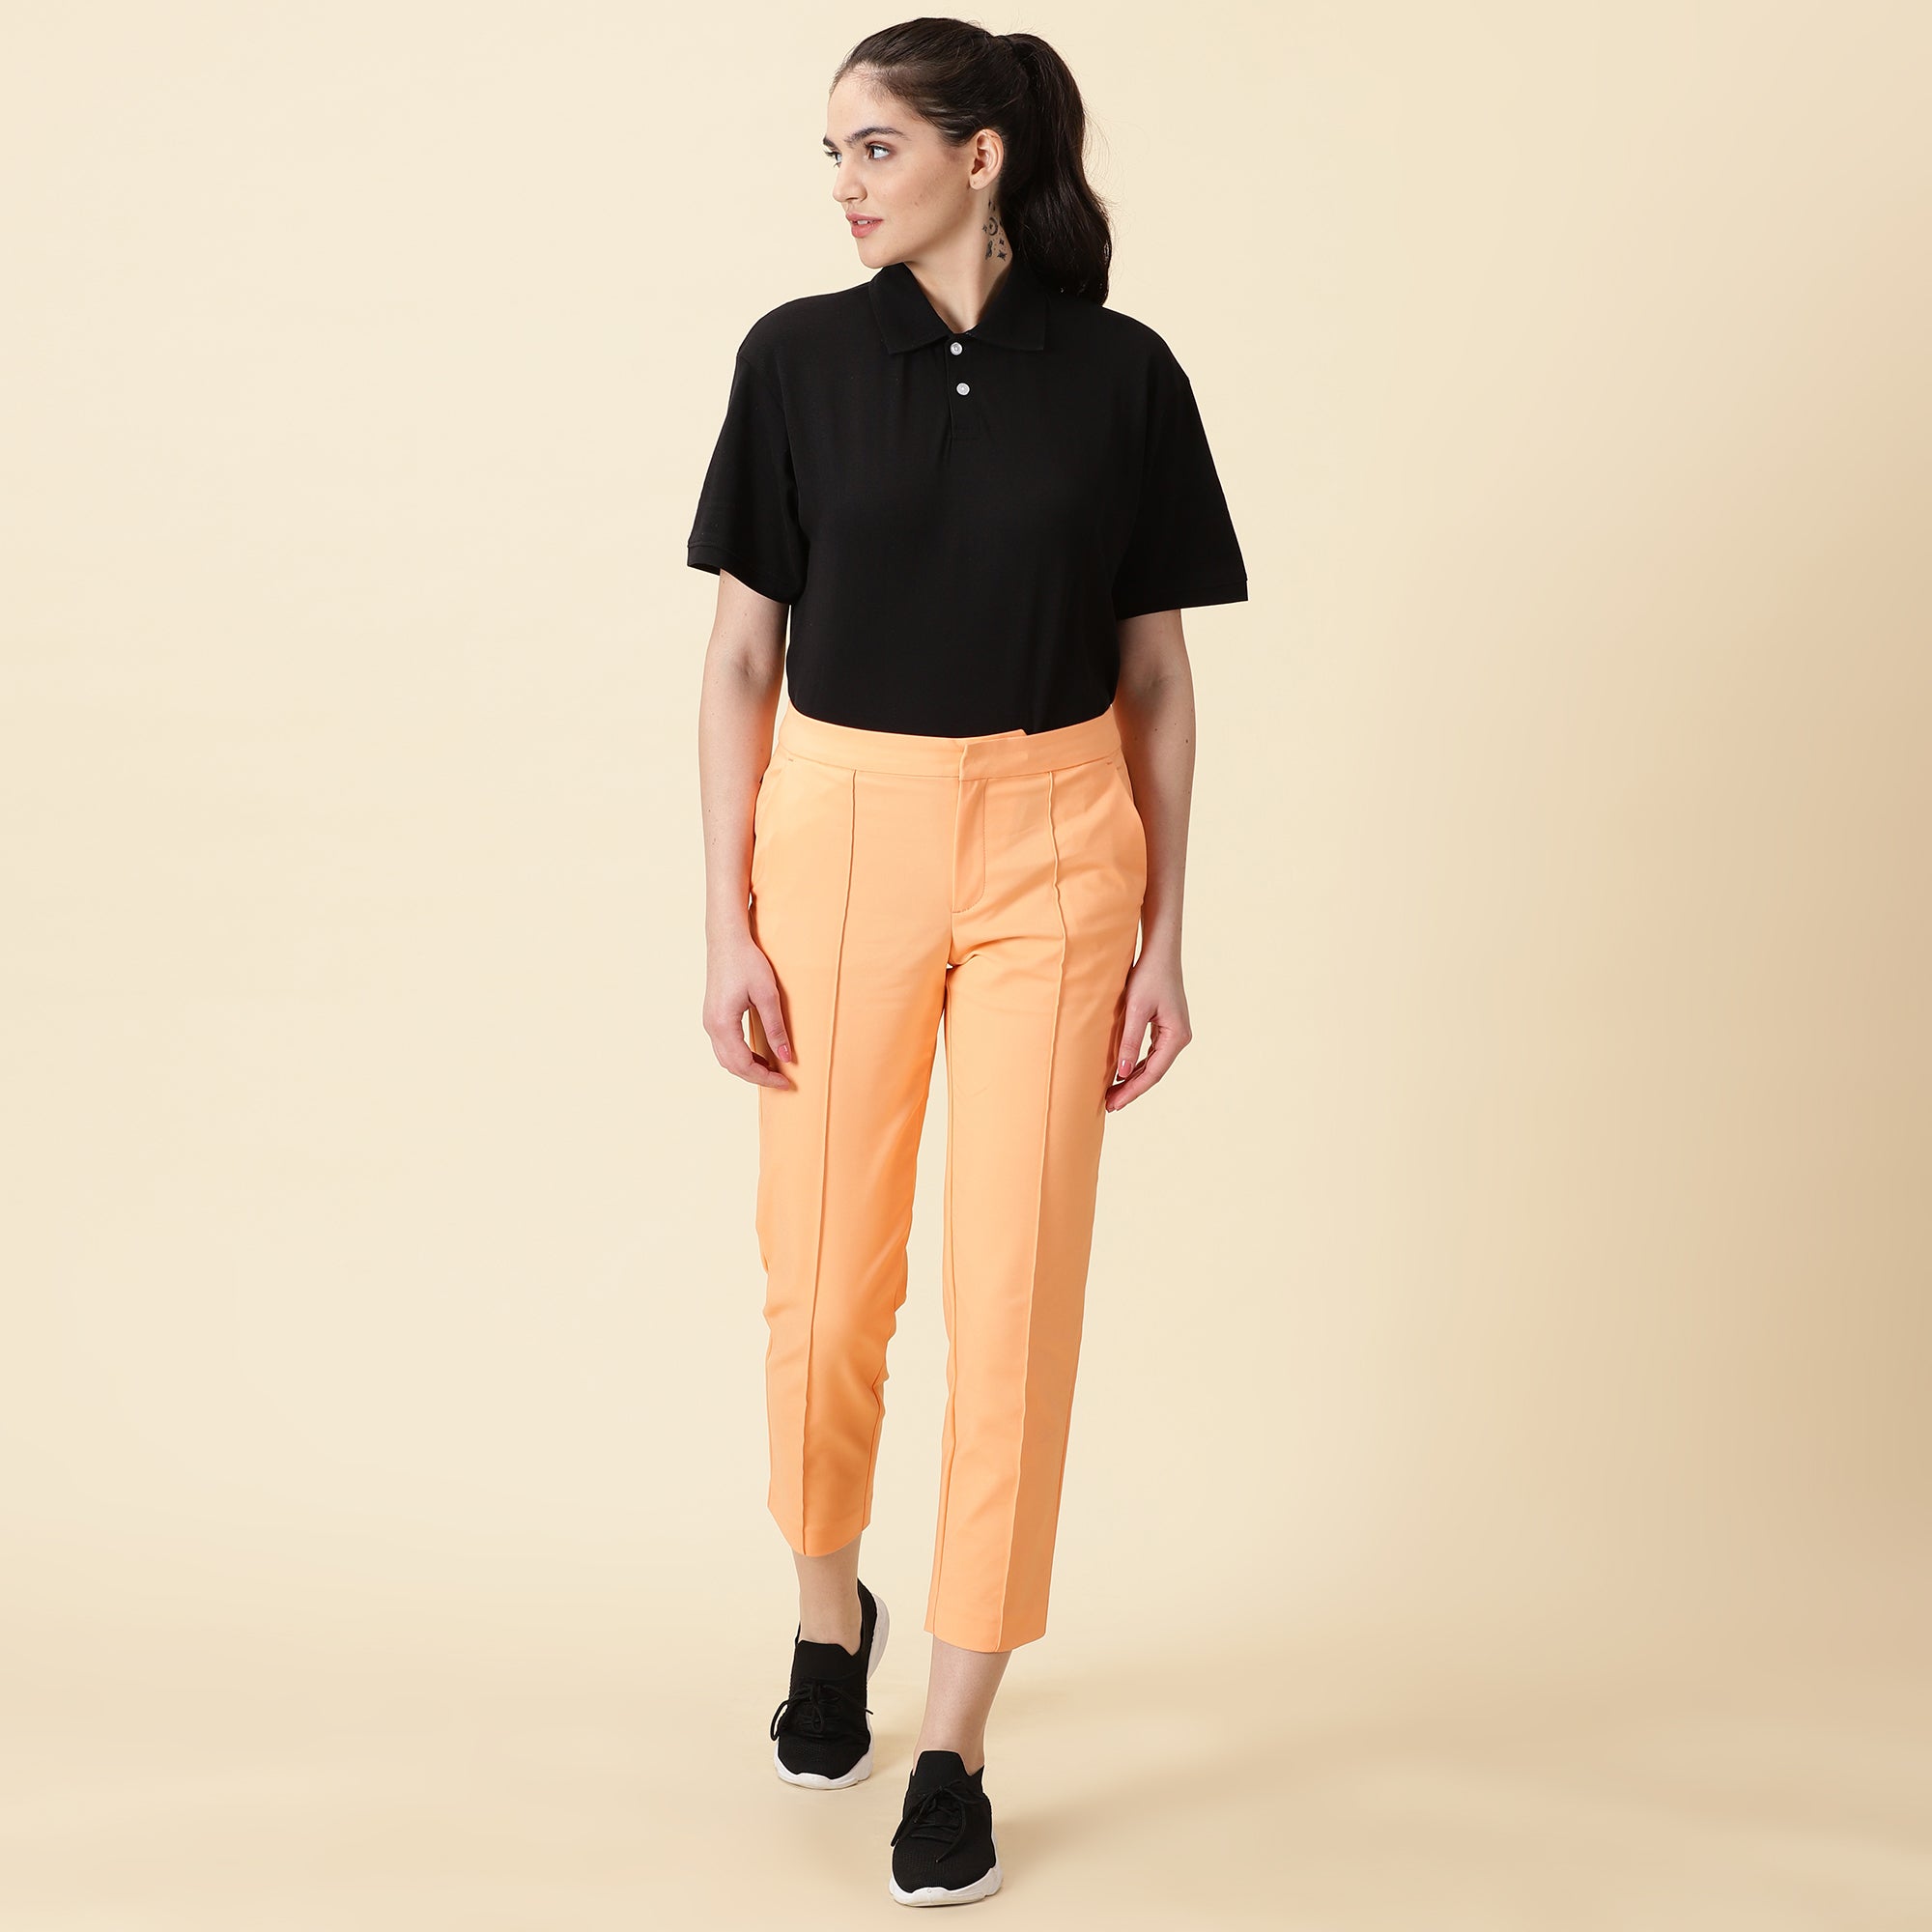 Buy Women Orange Solid Business Casual Slim Fit Trousers Online - 19605 |  Van Heusen